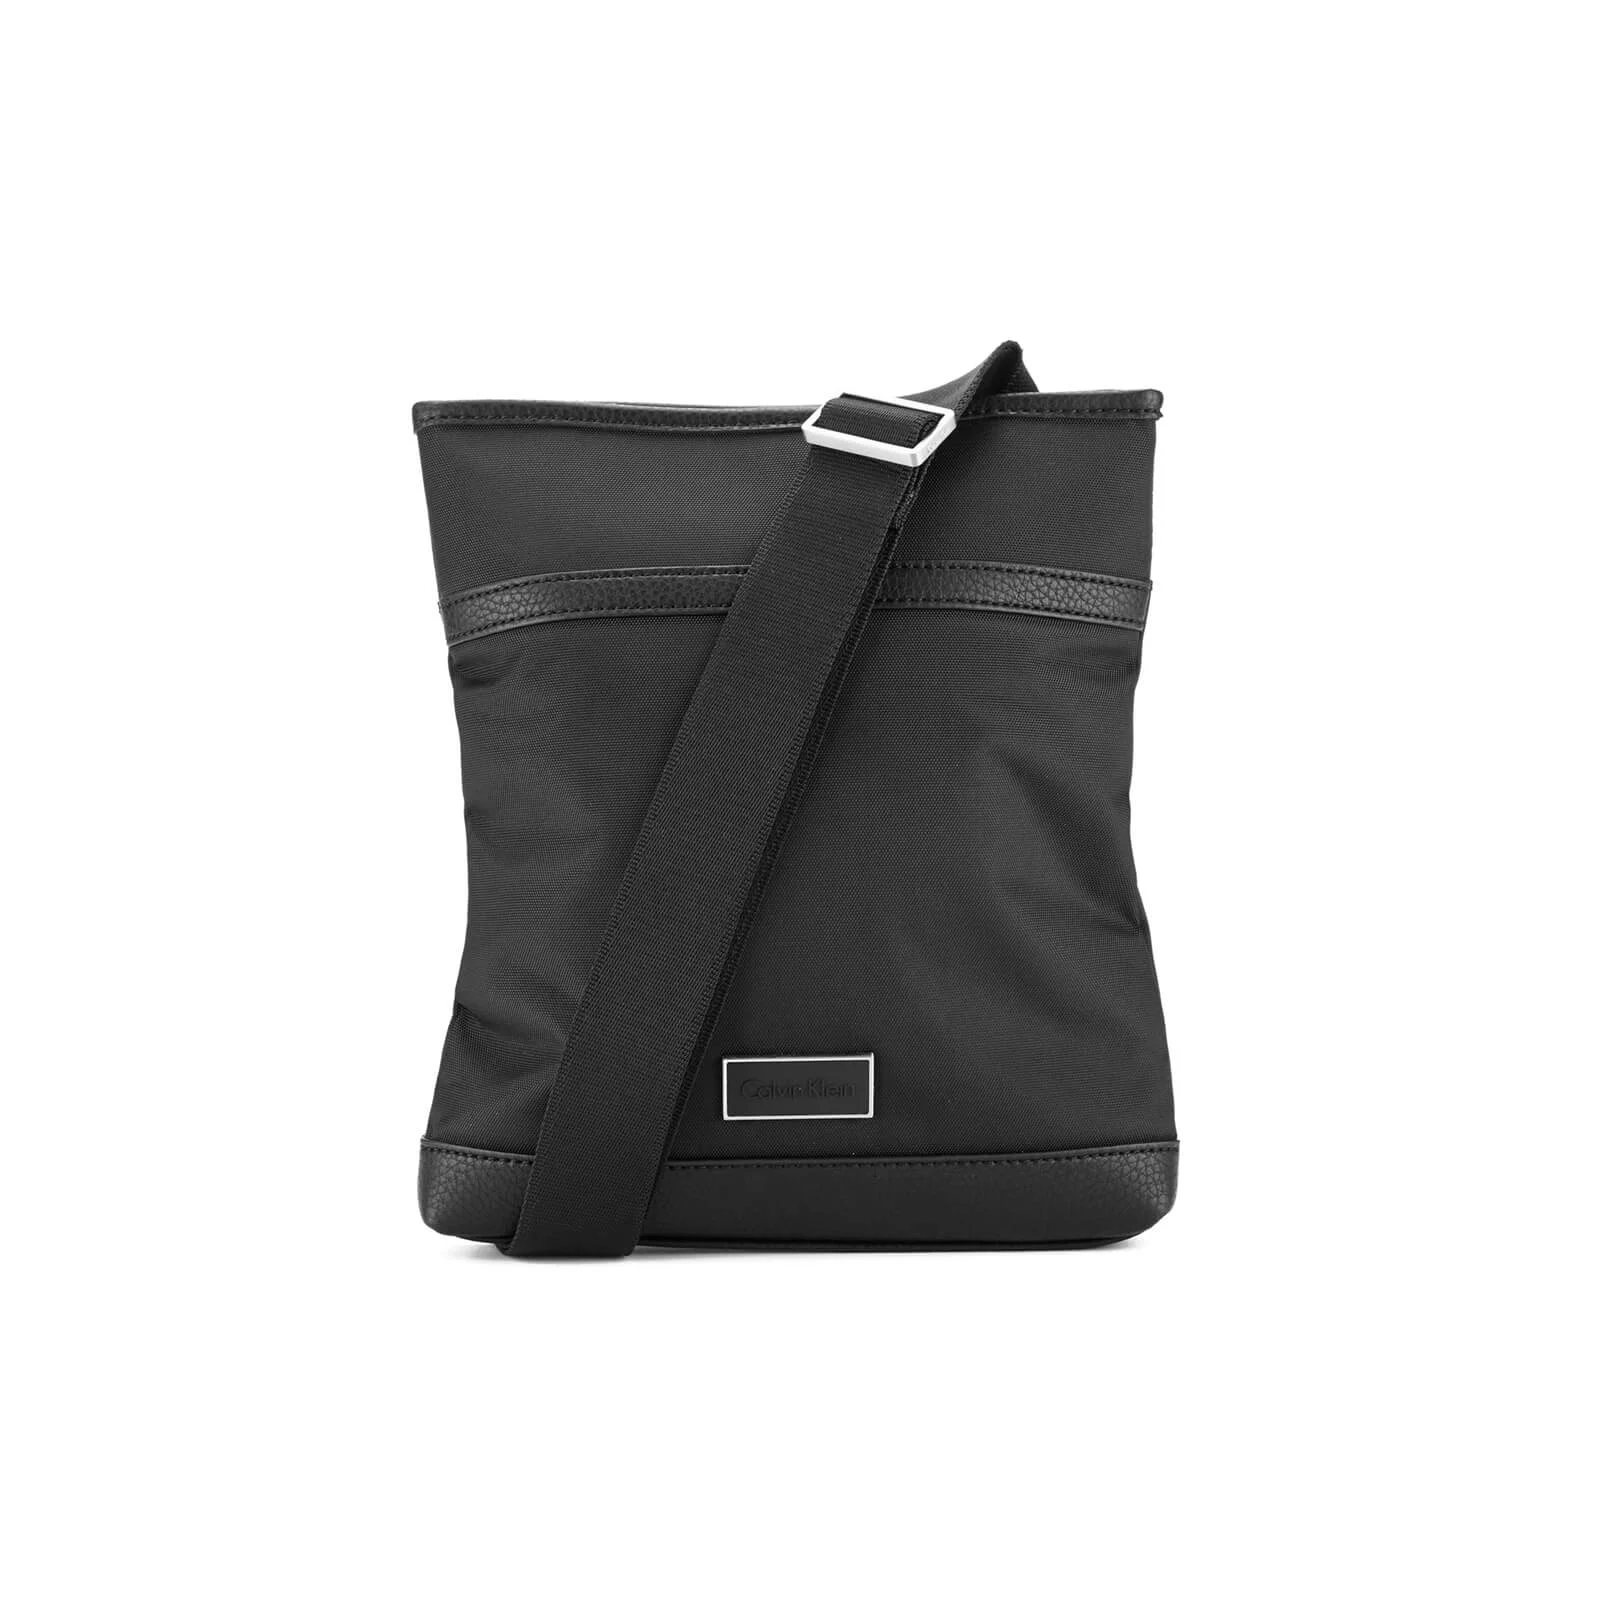 Calvin Klein Men's Ethan Nylon Flat Cross Body Bag - Black Image 1